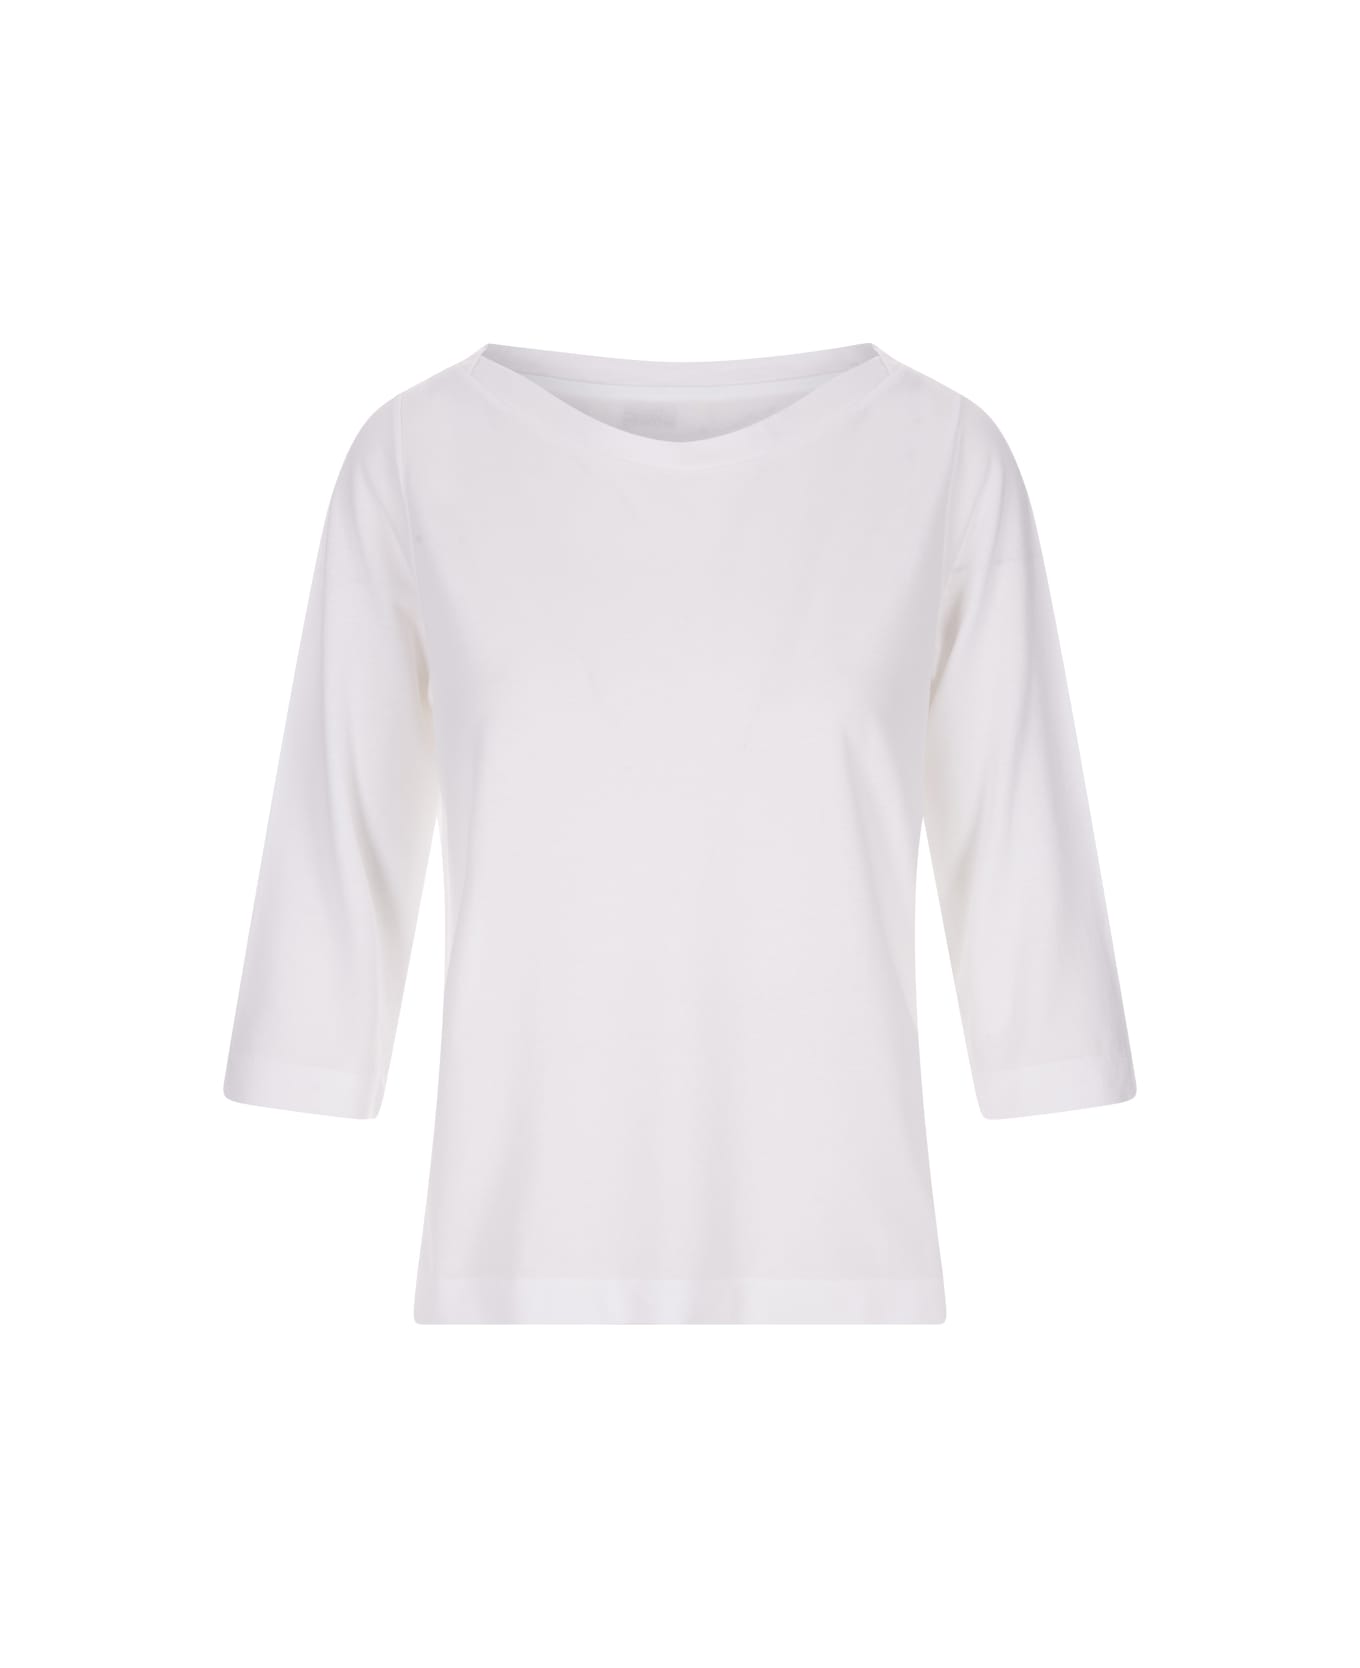 Zanone White Sweater With 3/4 Sleeve - Bianco ニットウェア